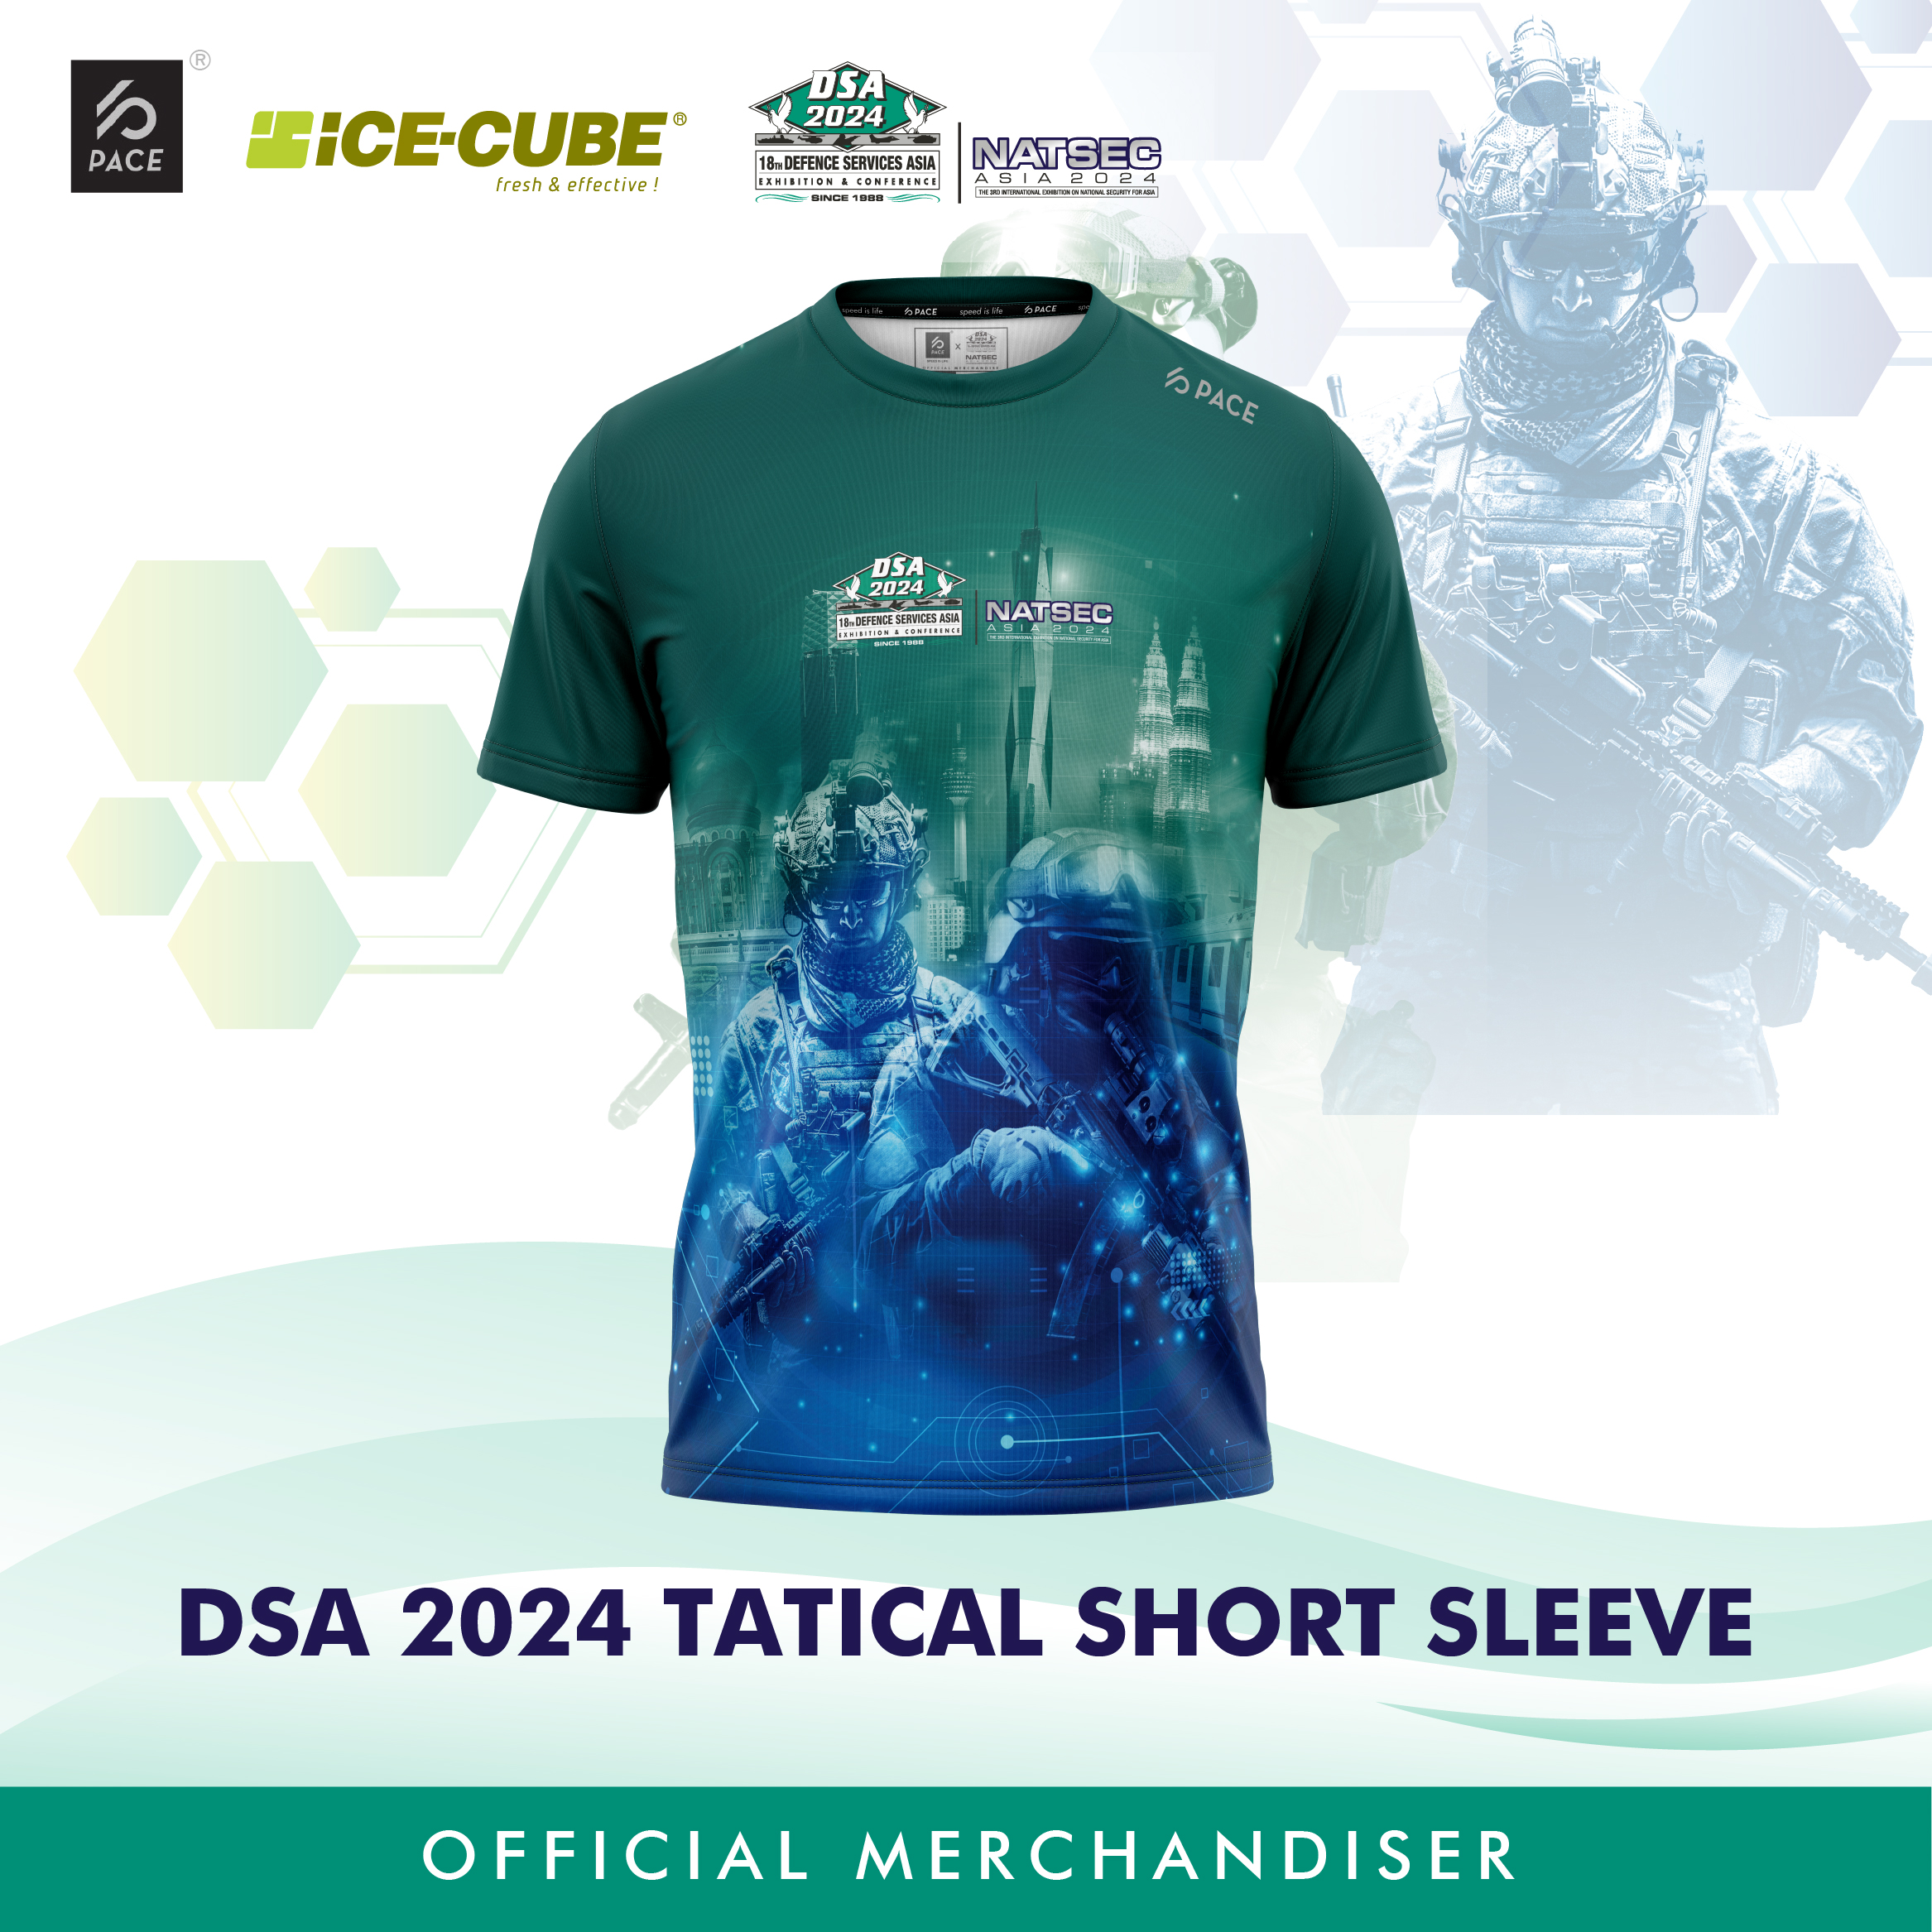 DSA 2024 TACTICAL SHORT SLEEVE